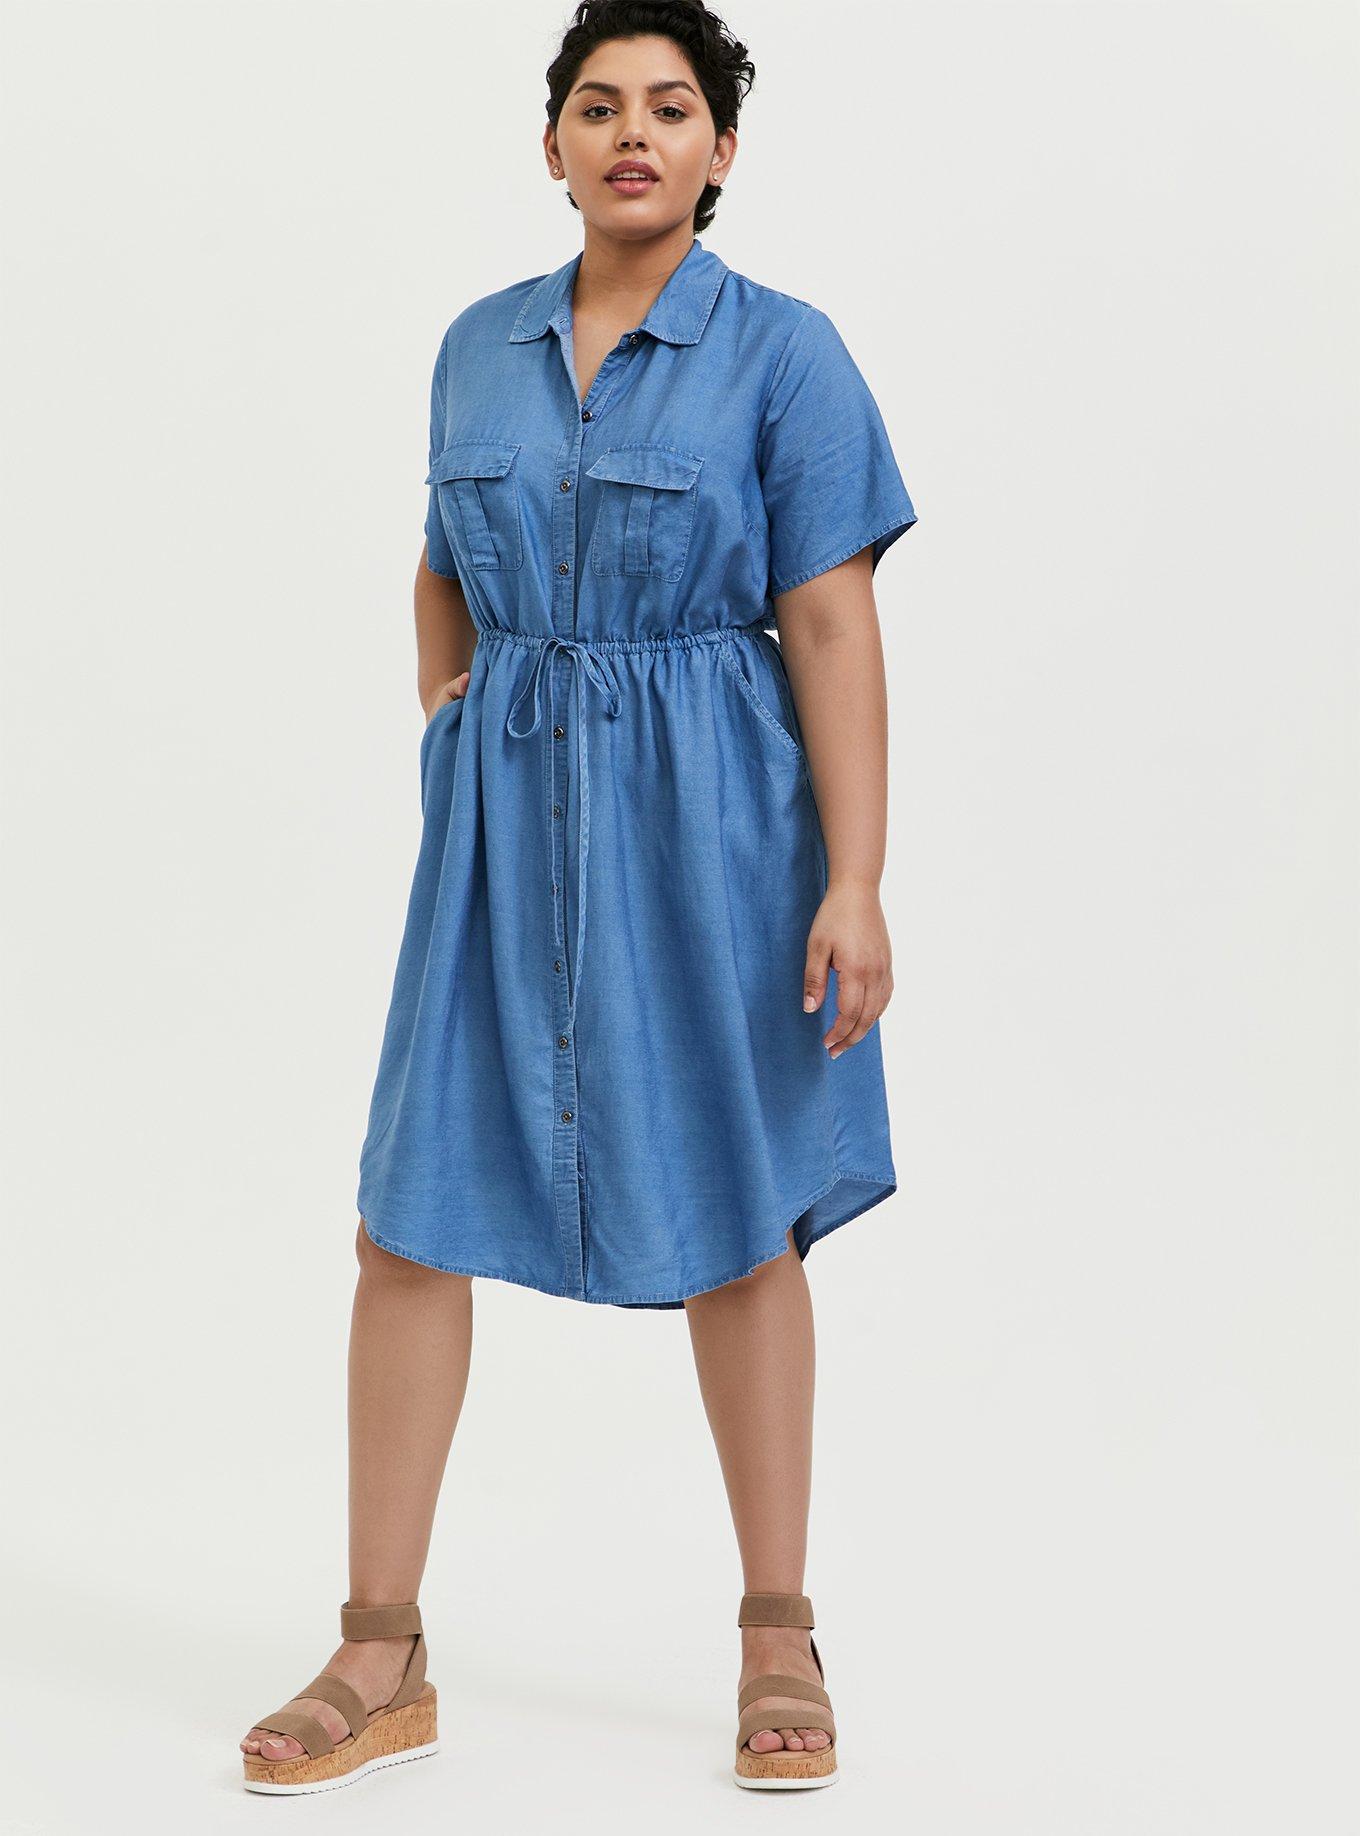 NWT Torrid 5 Blue Mini Textured Rayon Shirt Dress; Plus Size